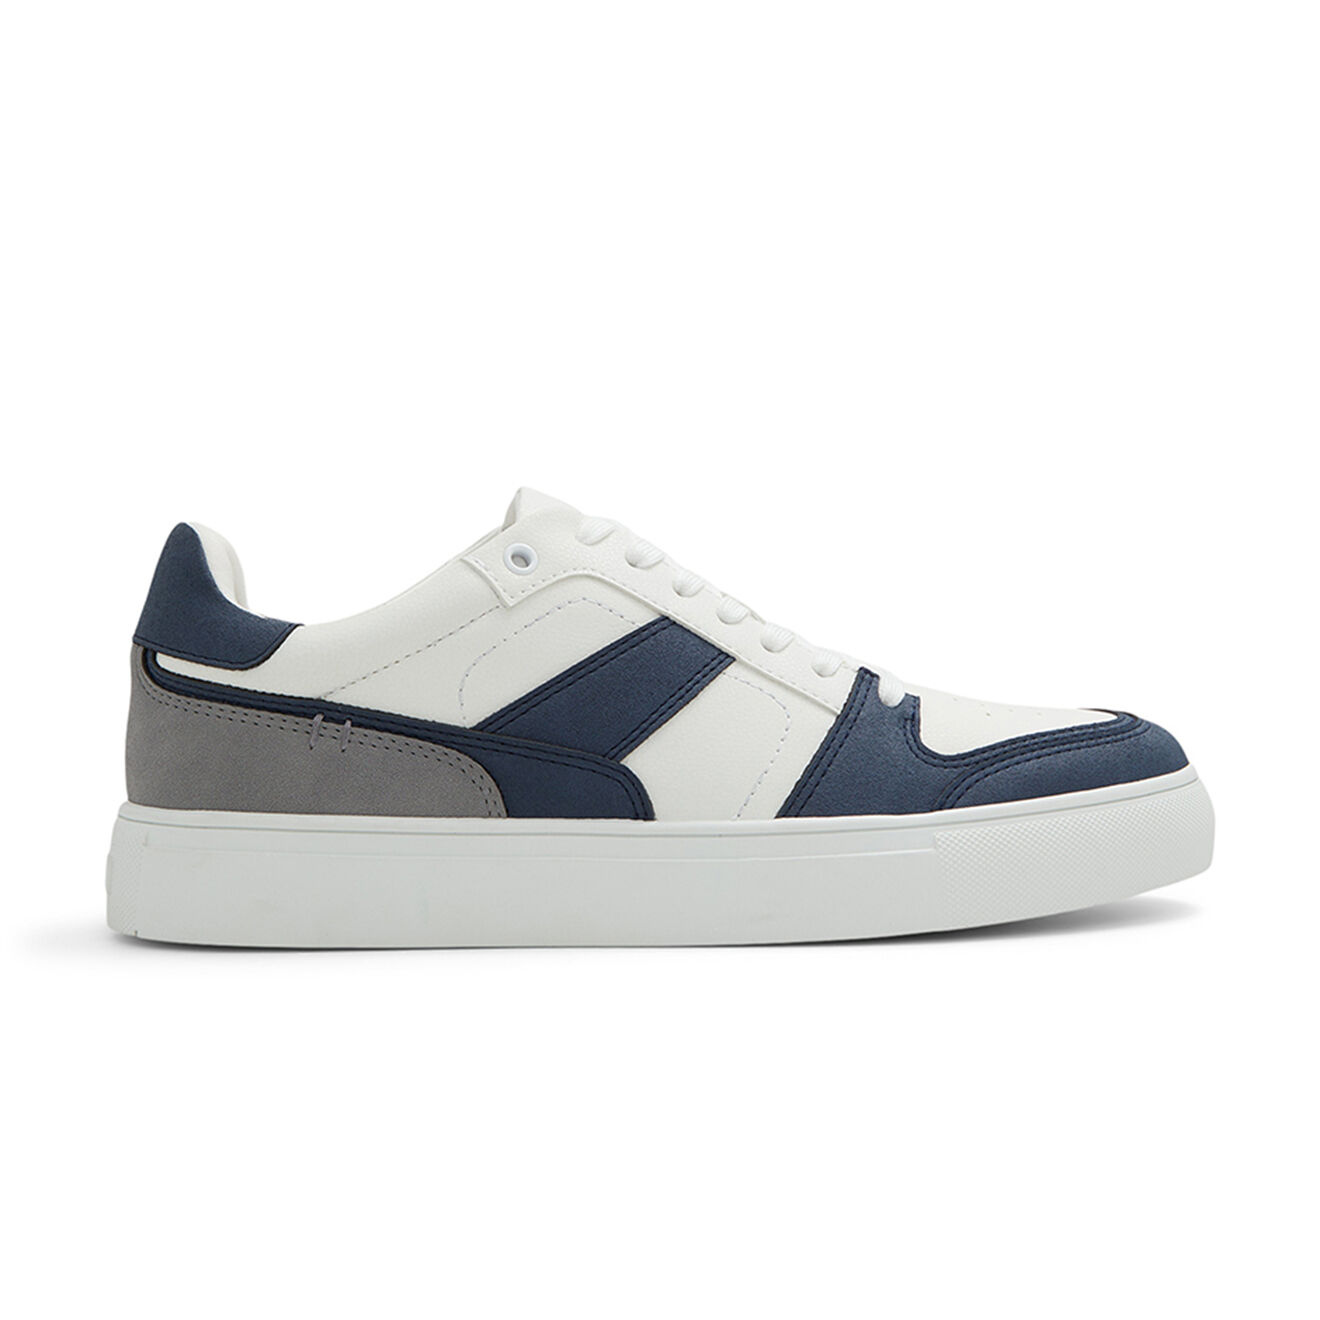 aldo - sneakers tim blanc/bleu marine/gris